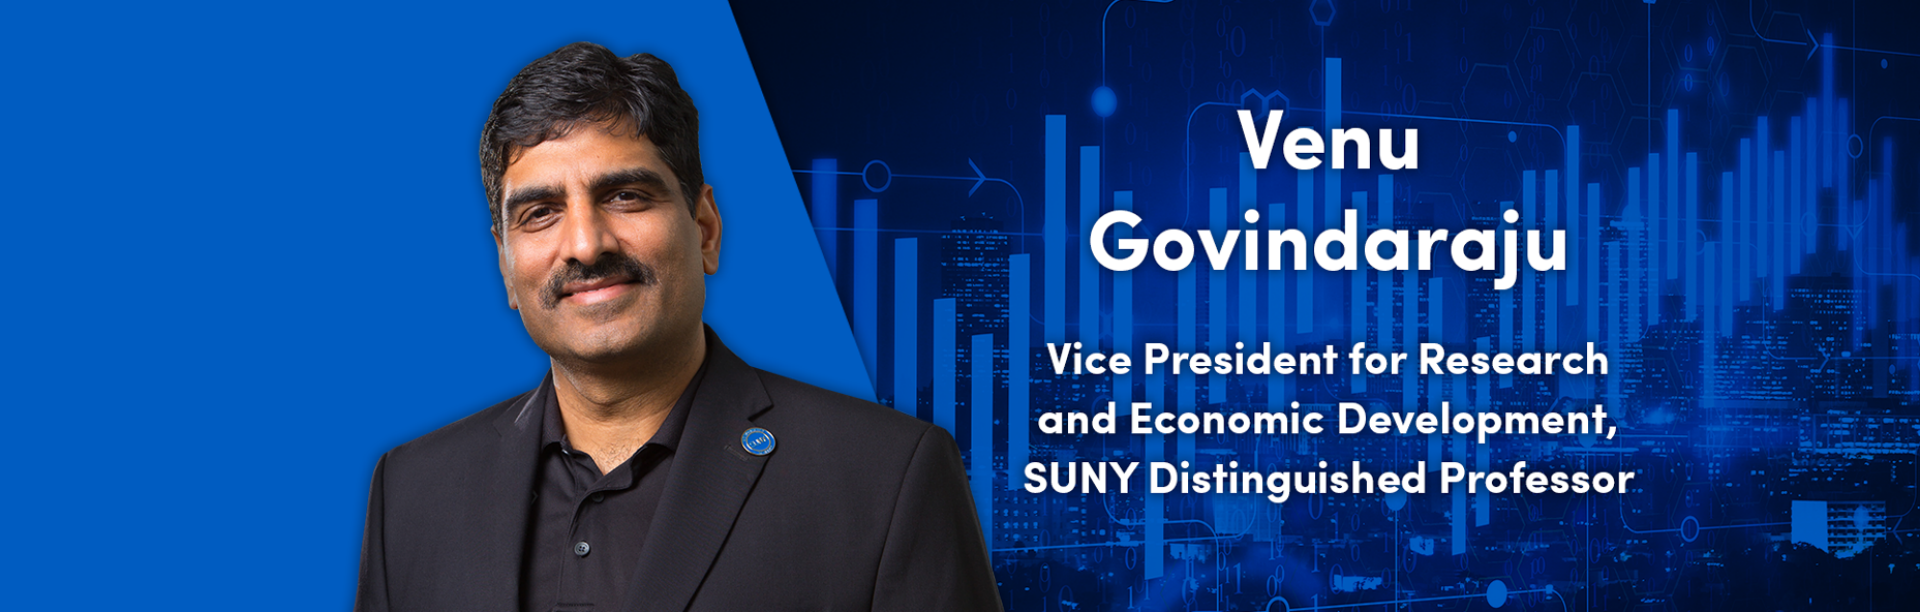 Venu Govindaraju, PhD - Vice President for Research and Economic Development, SUNY Distinguished Professor. 